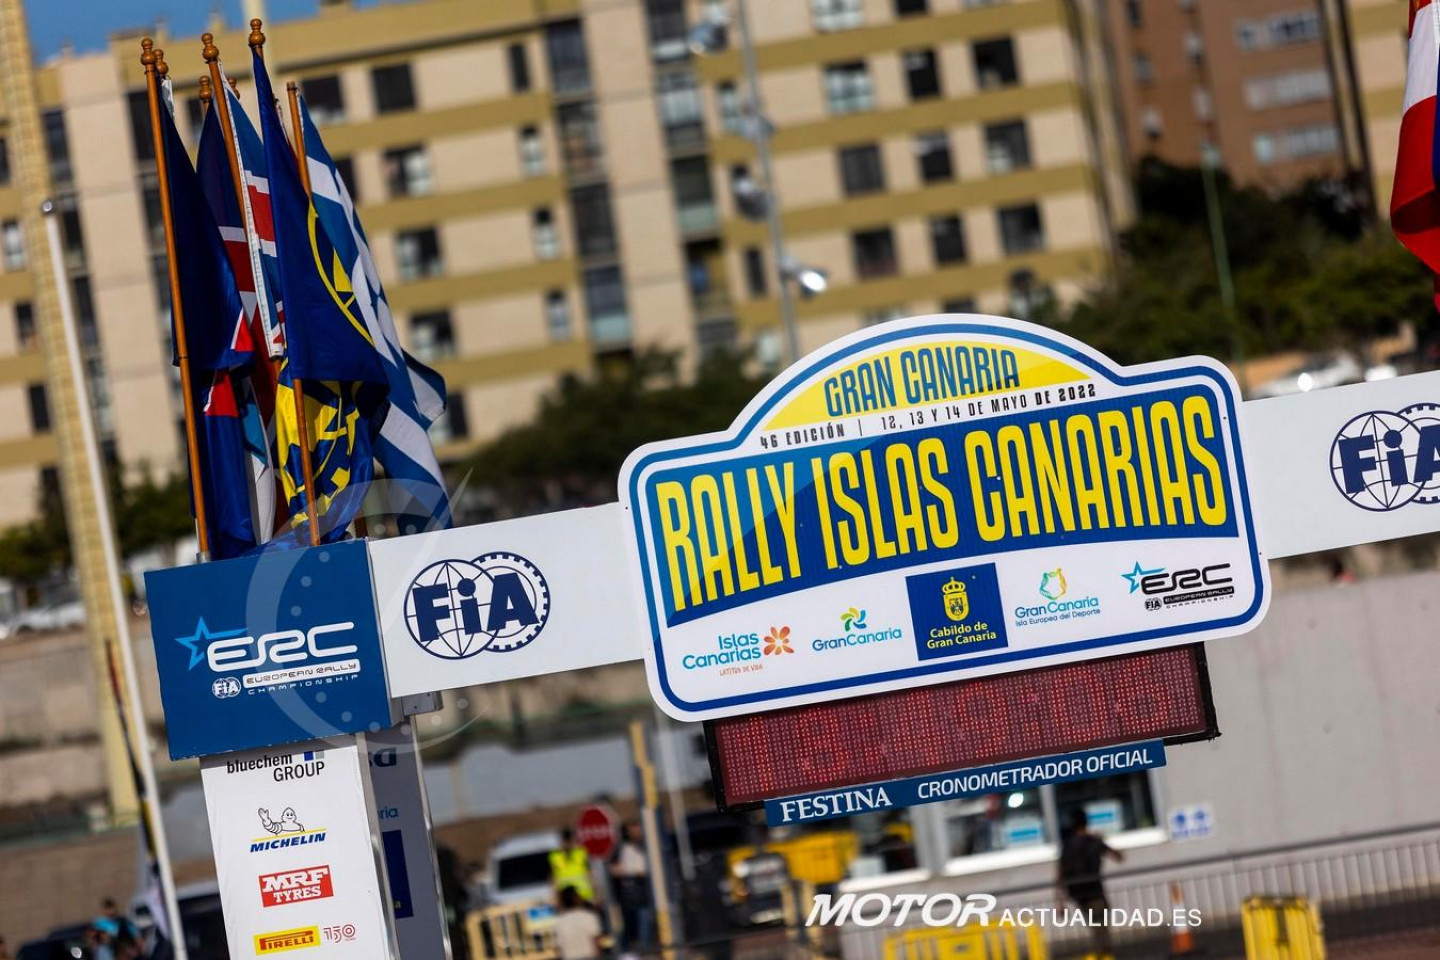 FIA European Rally Championship in Las Palmas, Canarias on 14th May 2022